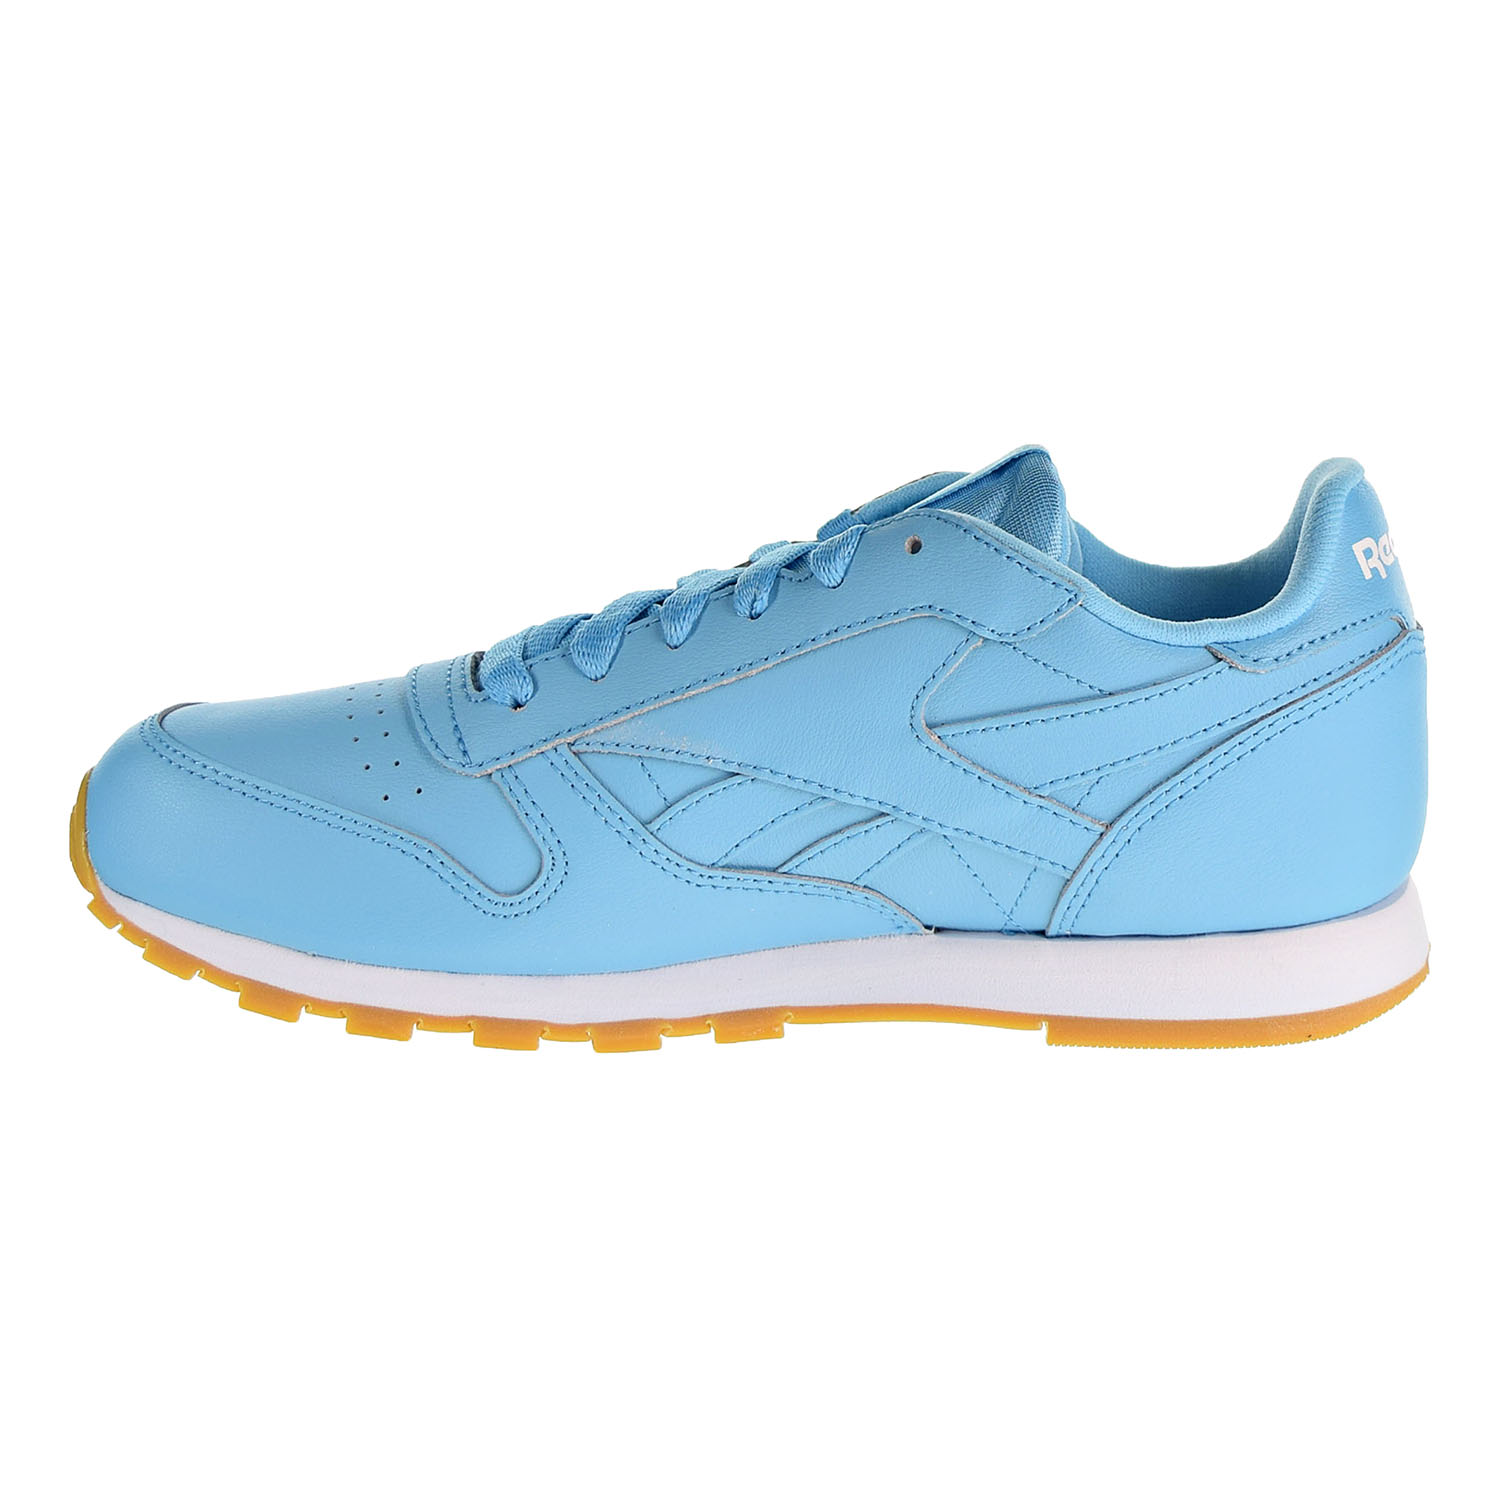 Reebok Classic Leather Gum Boys Shoes Crisp Blue/White/Gum cn4095 - image 4 of 6